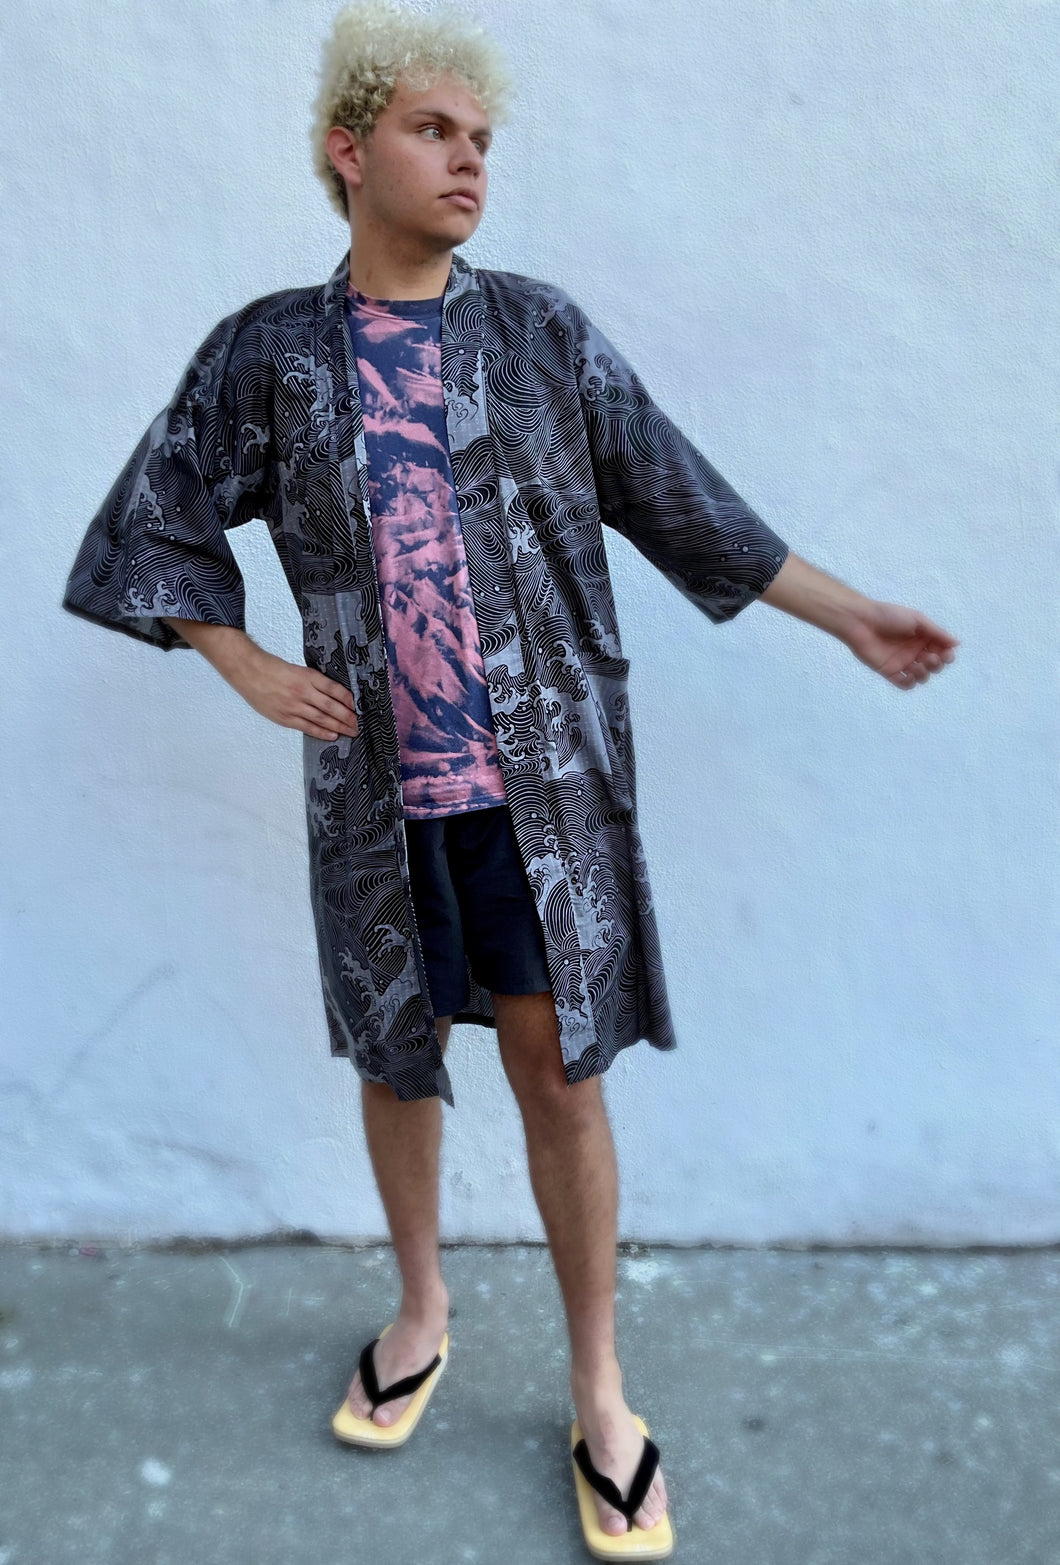 Kimono Robe - stormy waves grey black